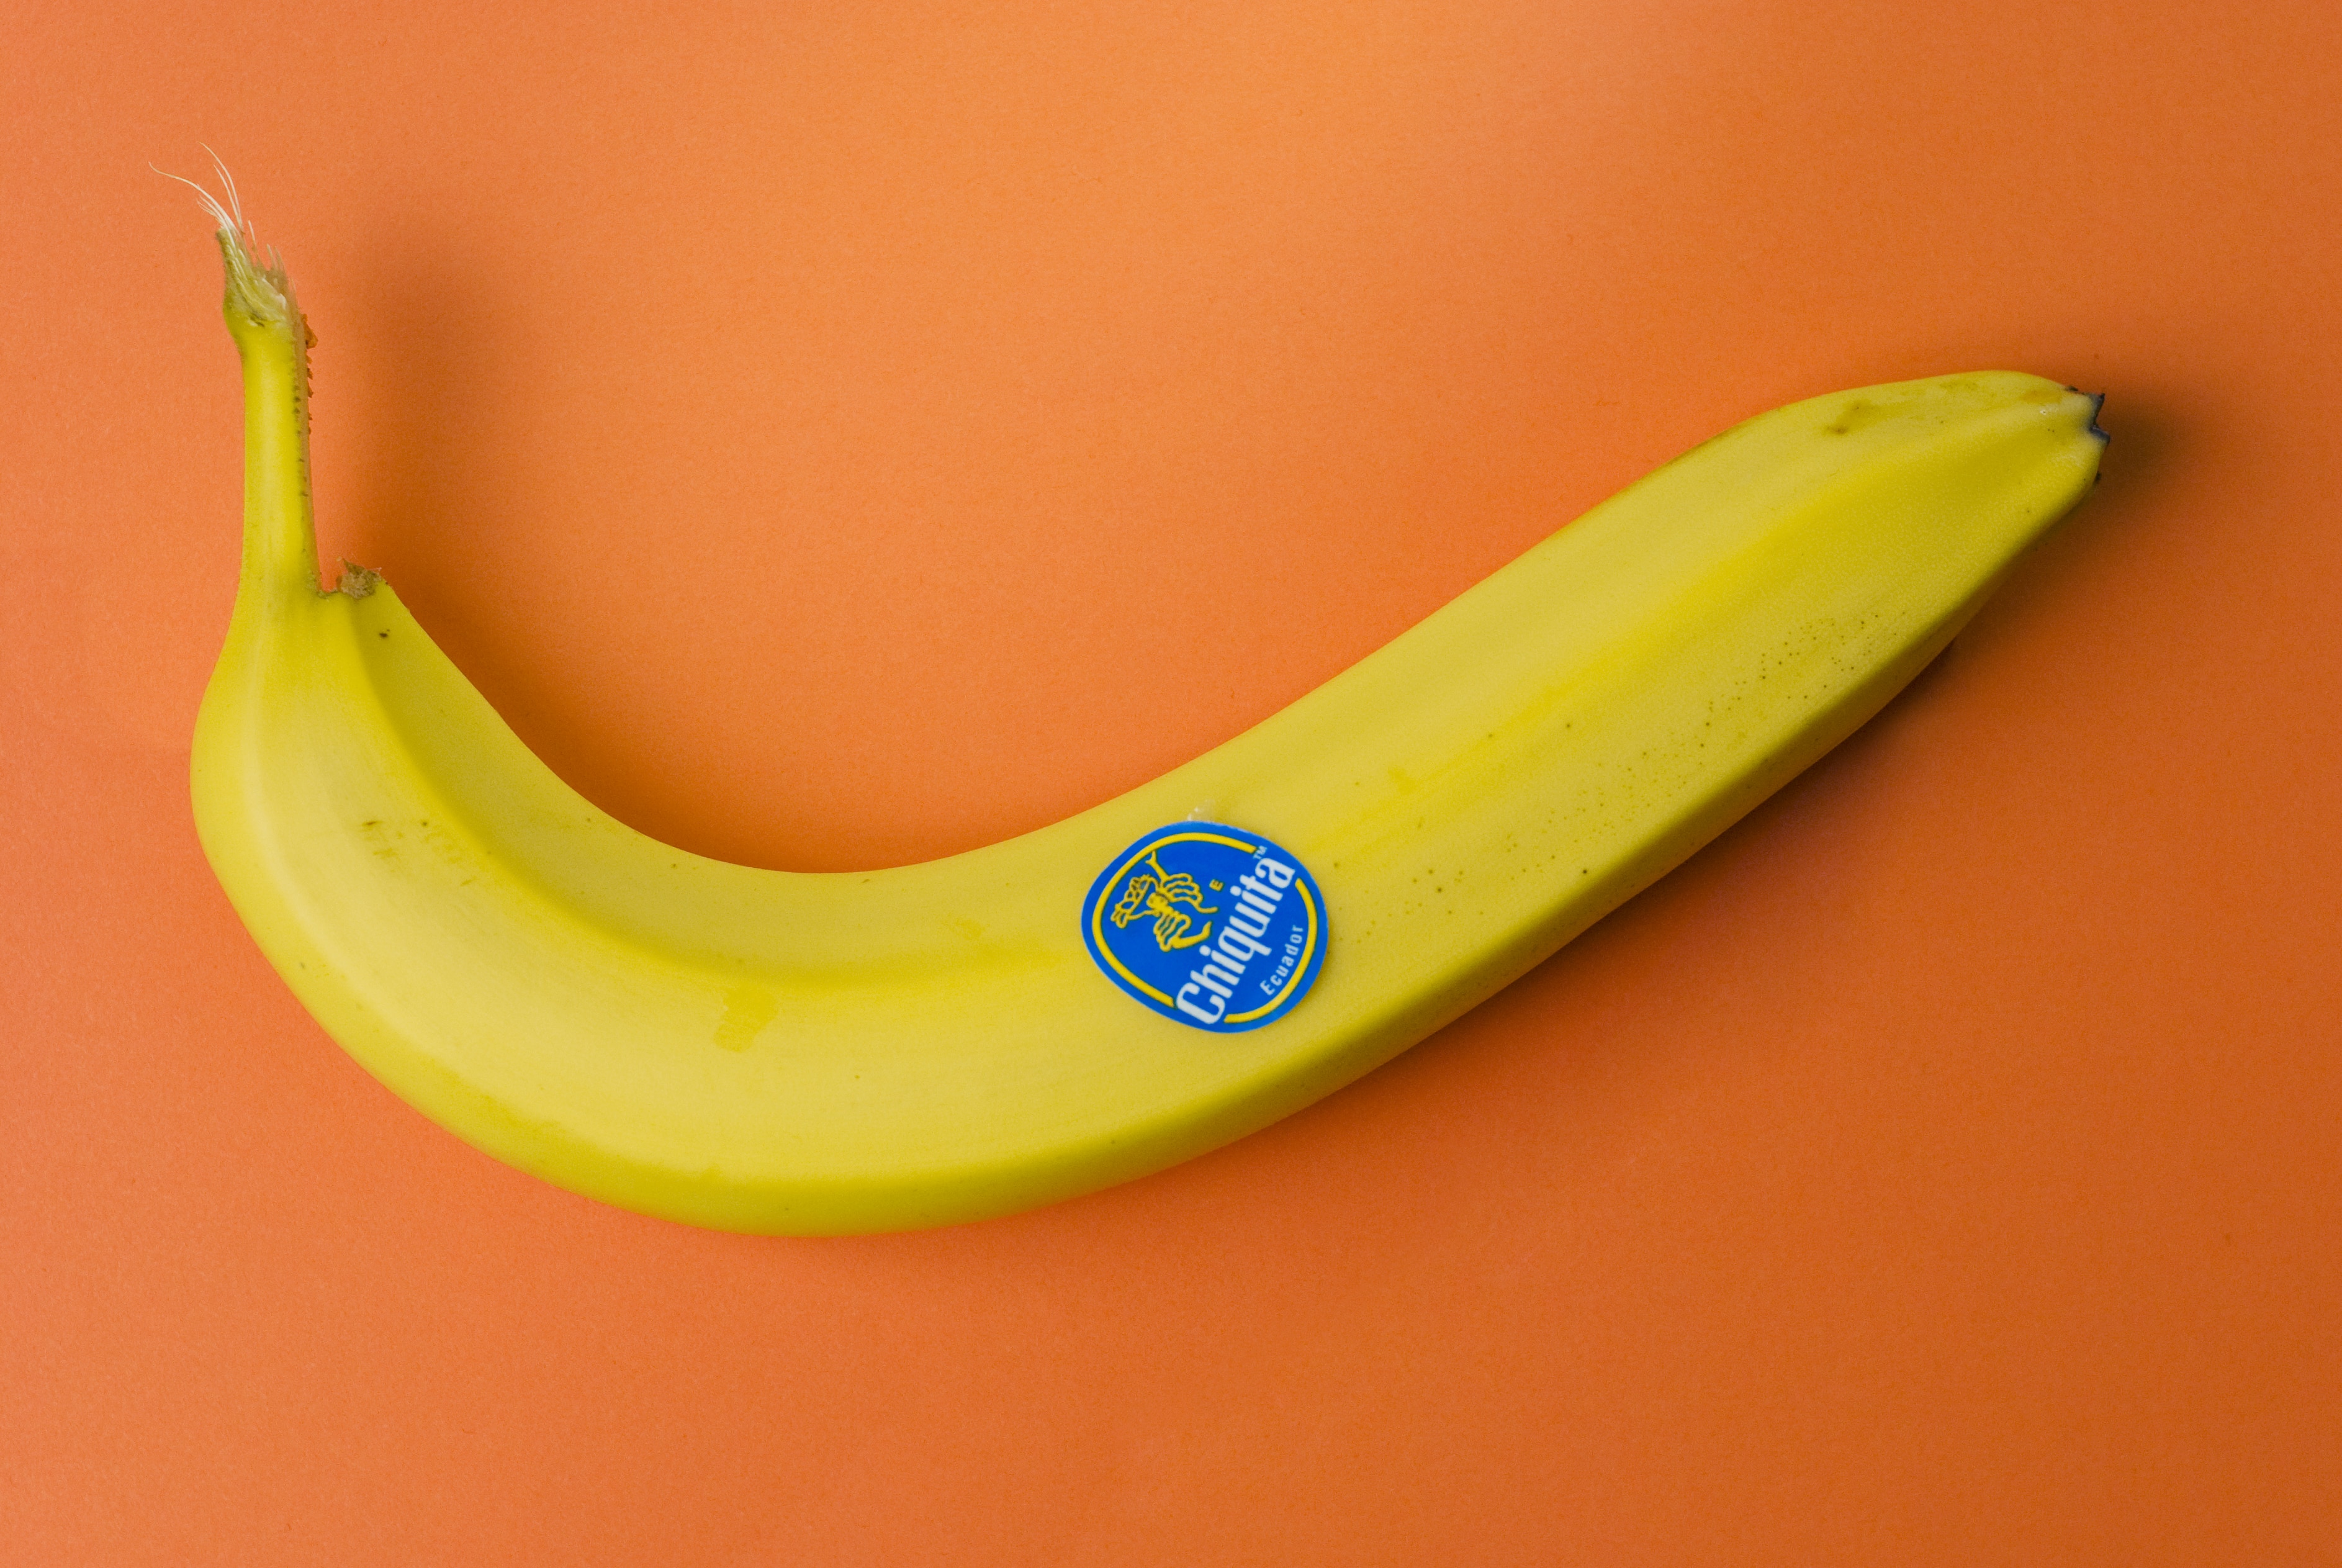 yellow banana on orange surface